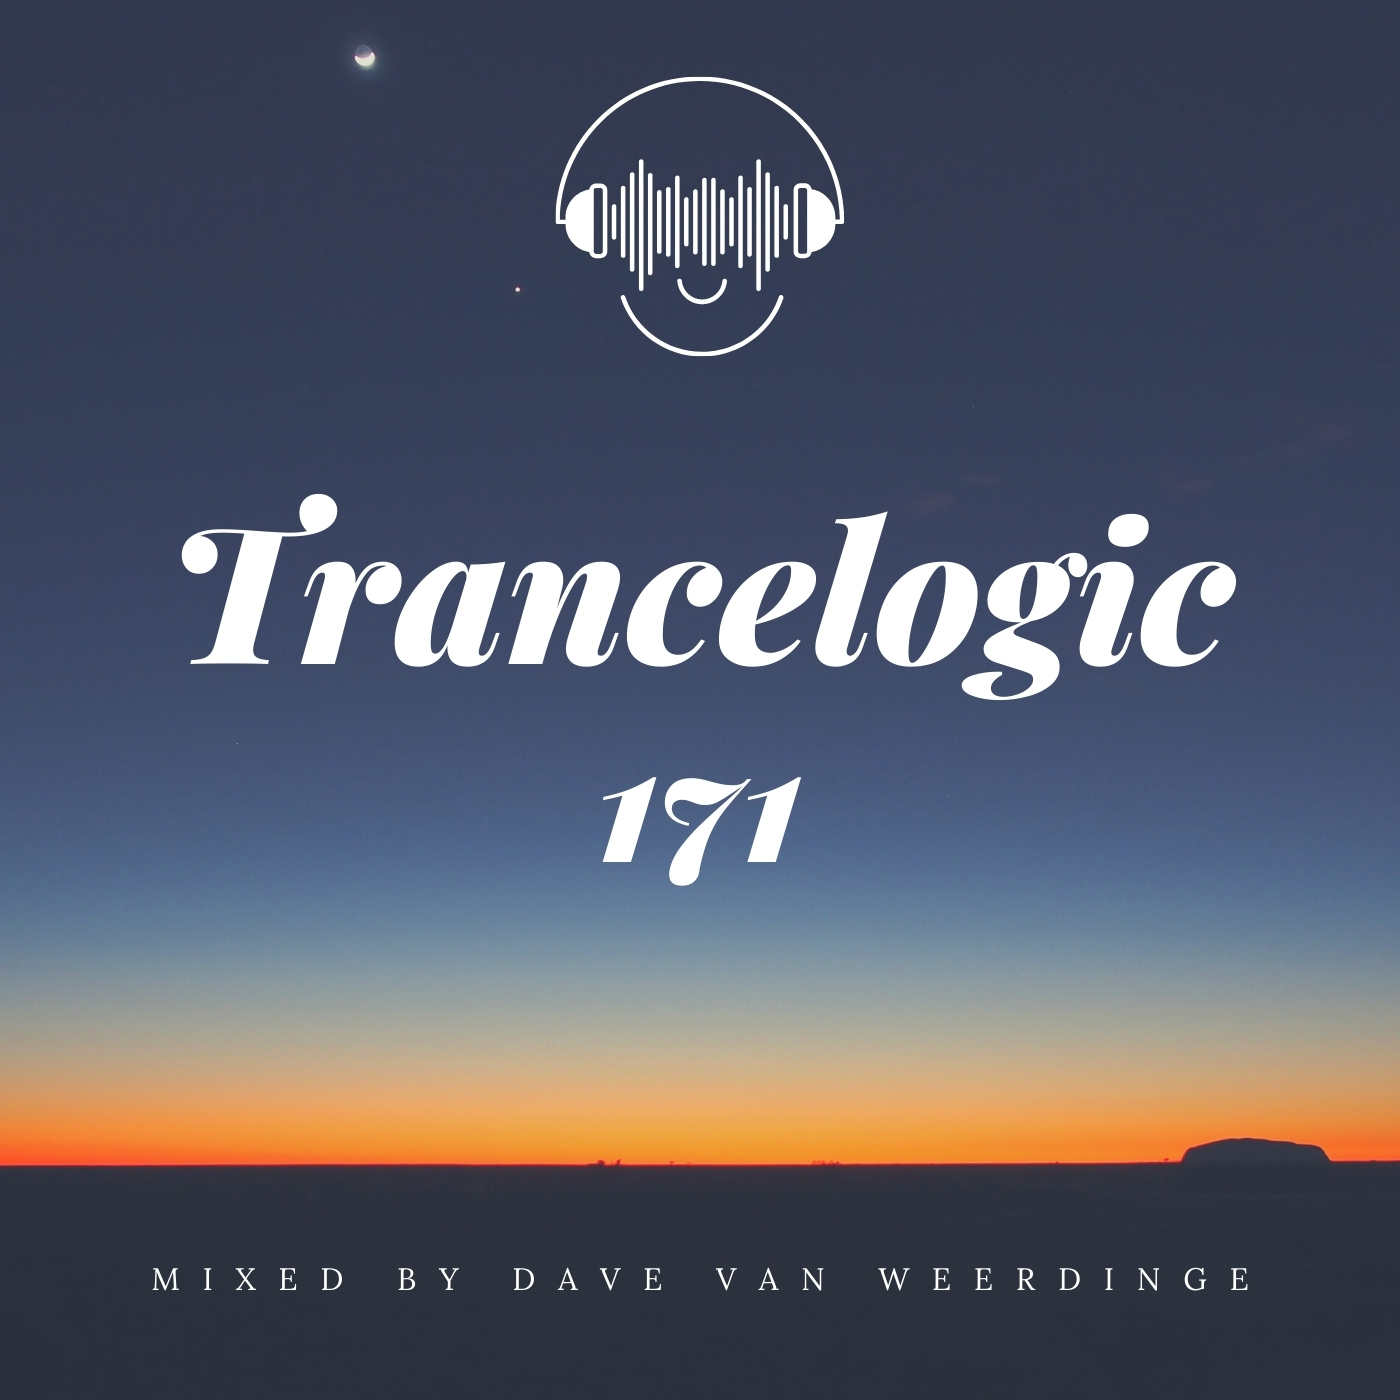 Trancelogic 171 by Dave van Weerdinge